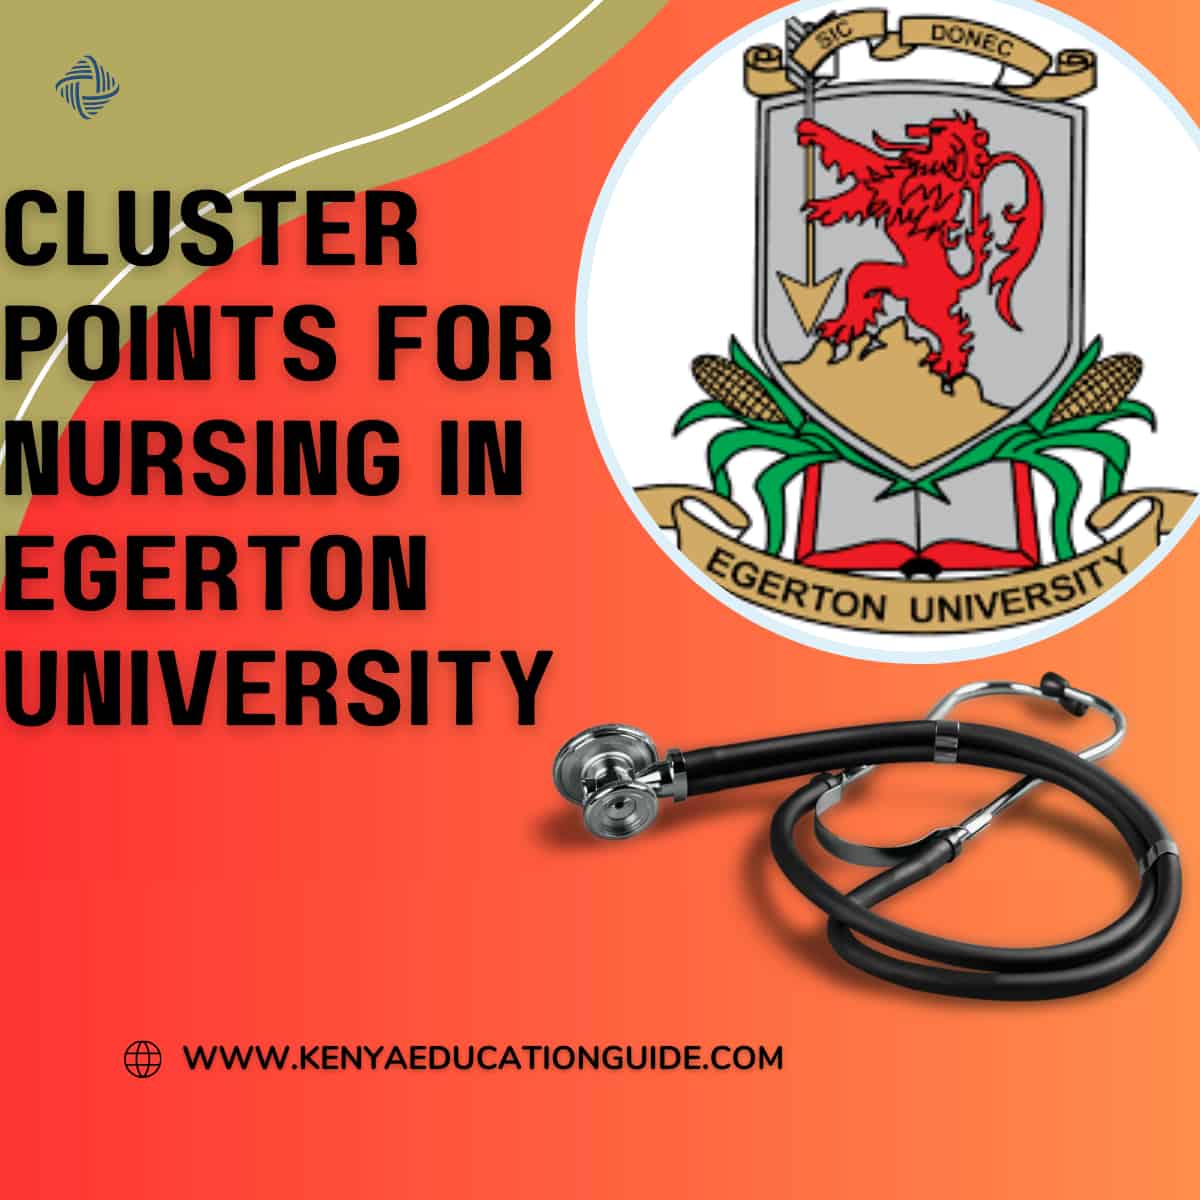 Cluster Points for Nursing in Egerton University